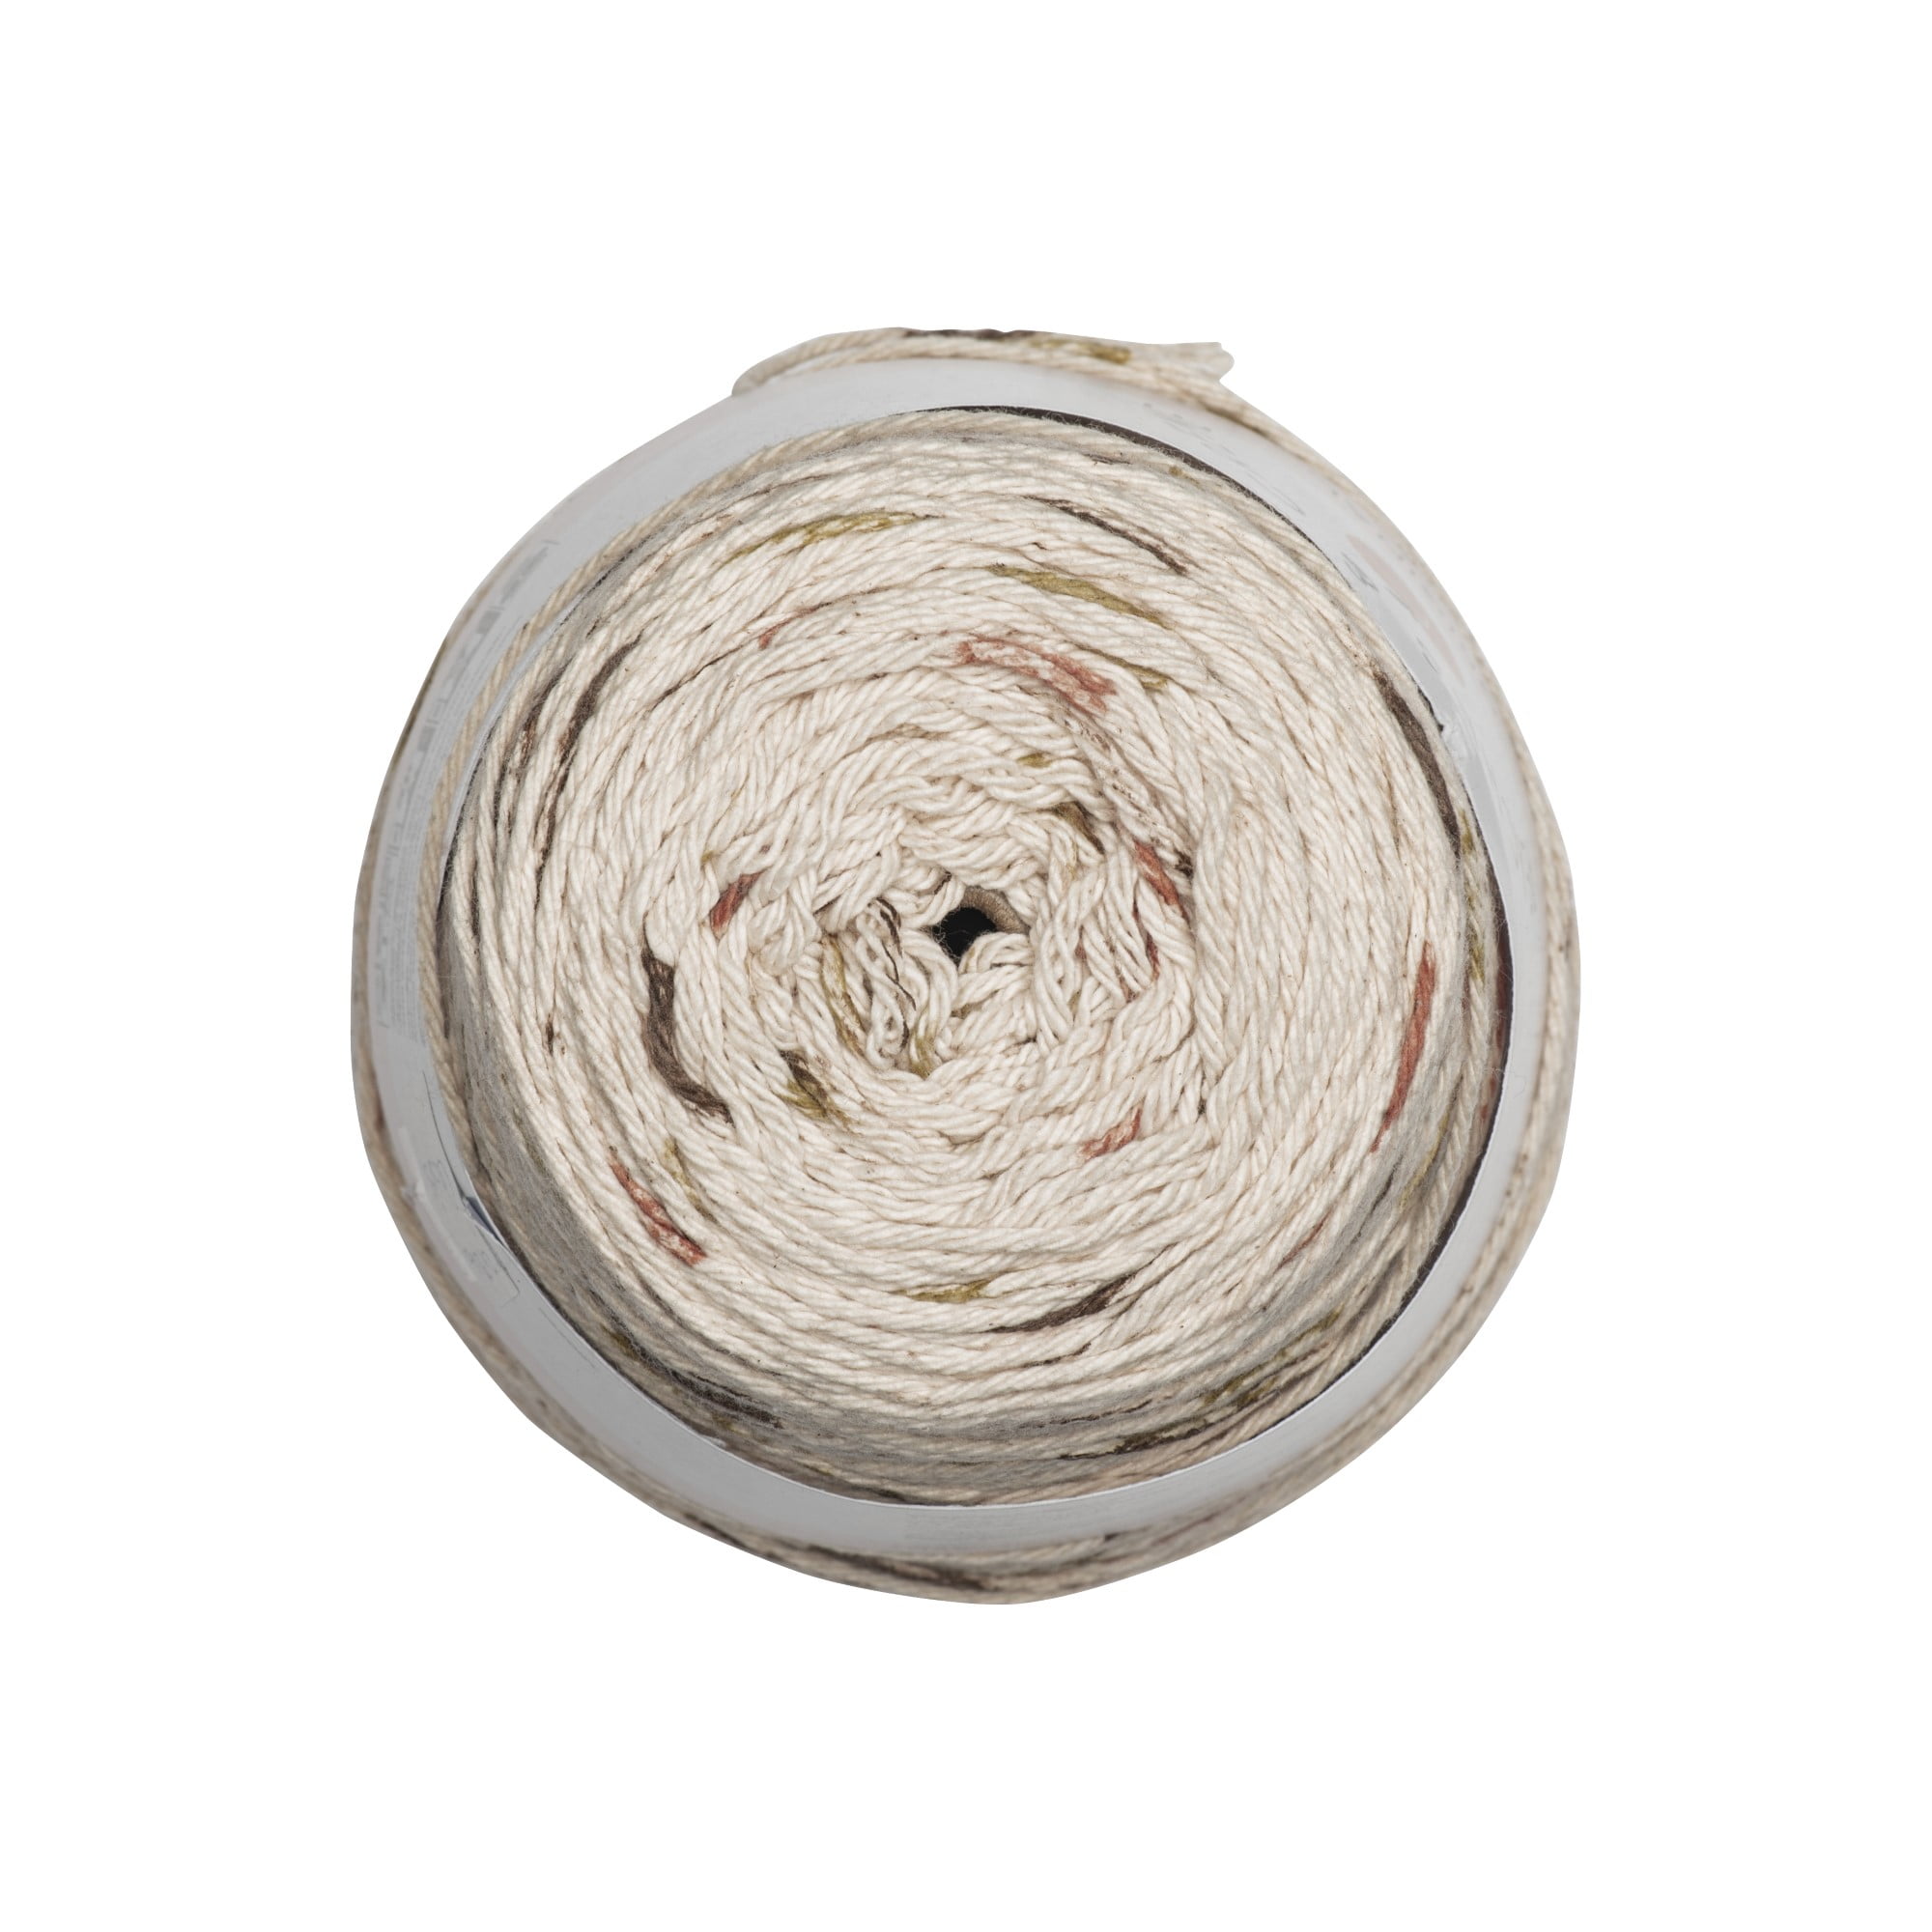 Peaches & Creme Cone #4 Medium Cotton Yarn, Rosemary 14oz/400g, 674 Yards (3 Pack)